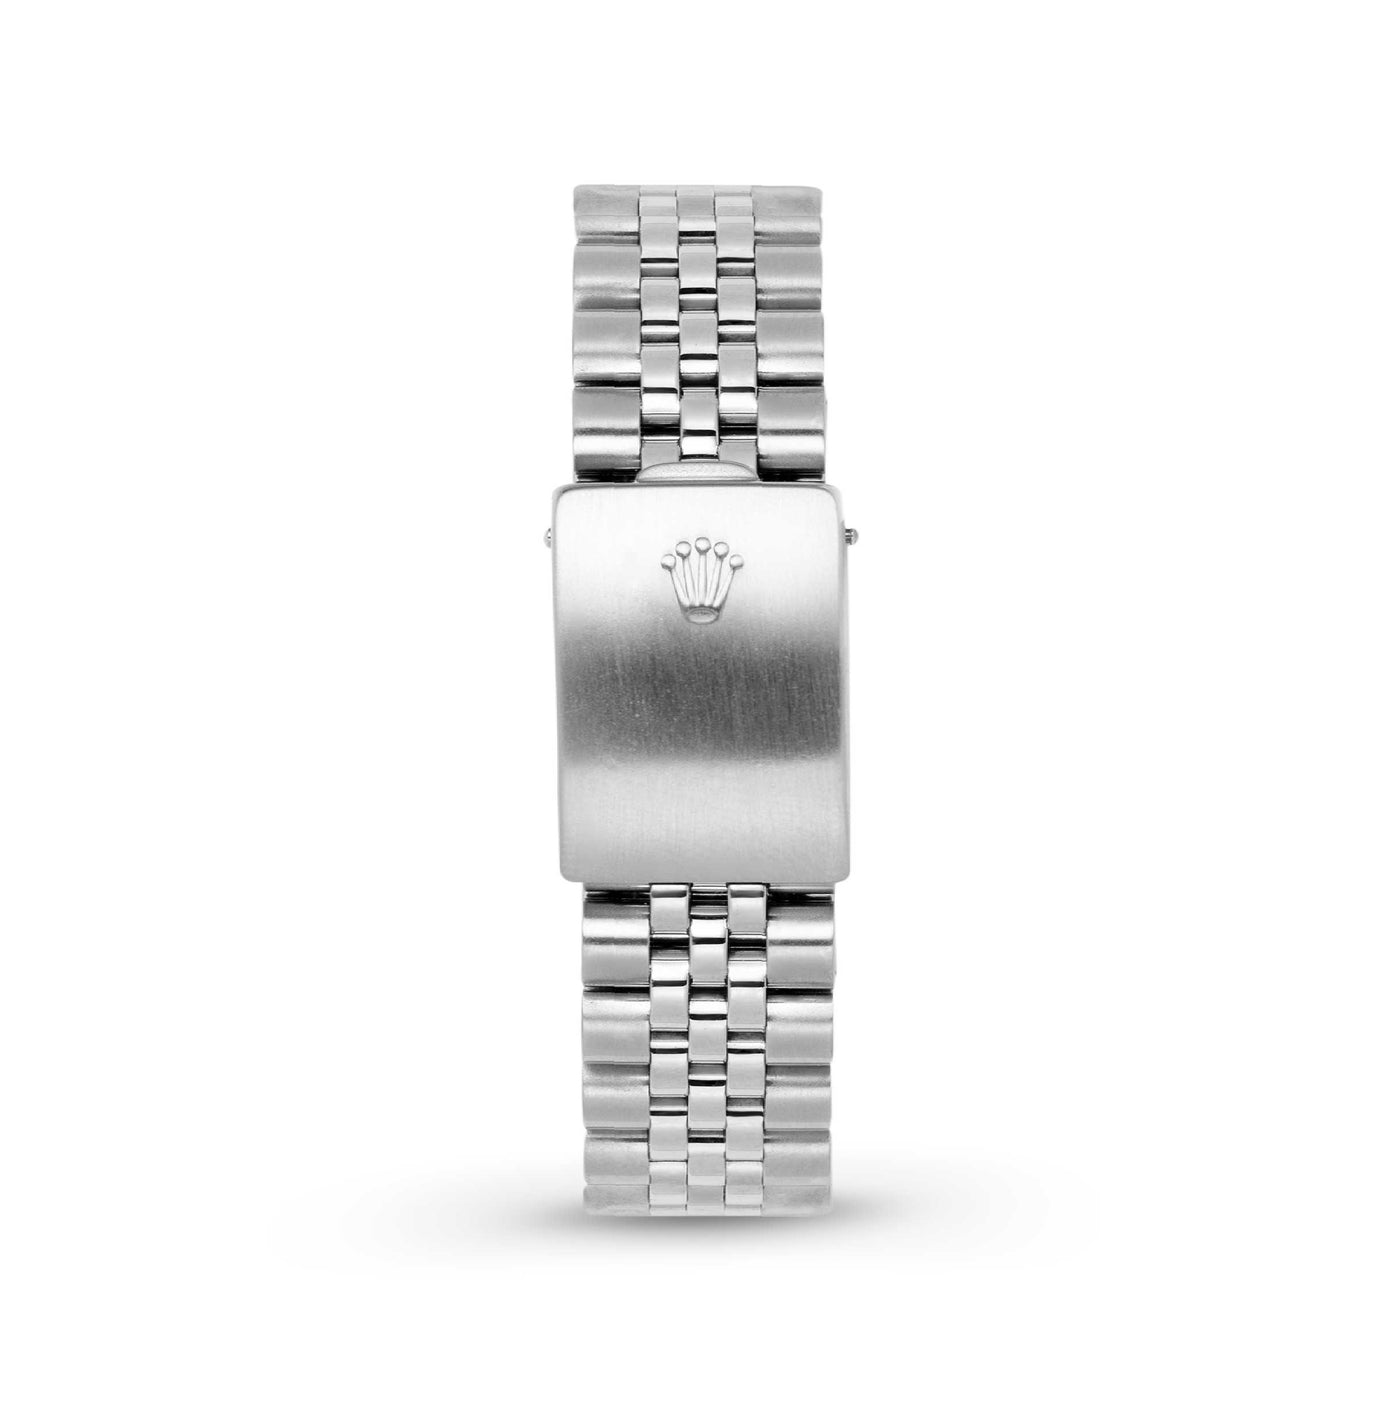 Rolex Datejust Diamond Bezel Watch 36mm Black Dial | 2.60ct